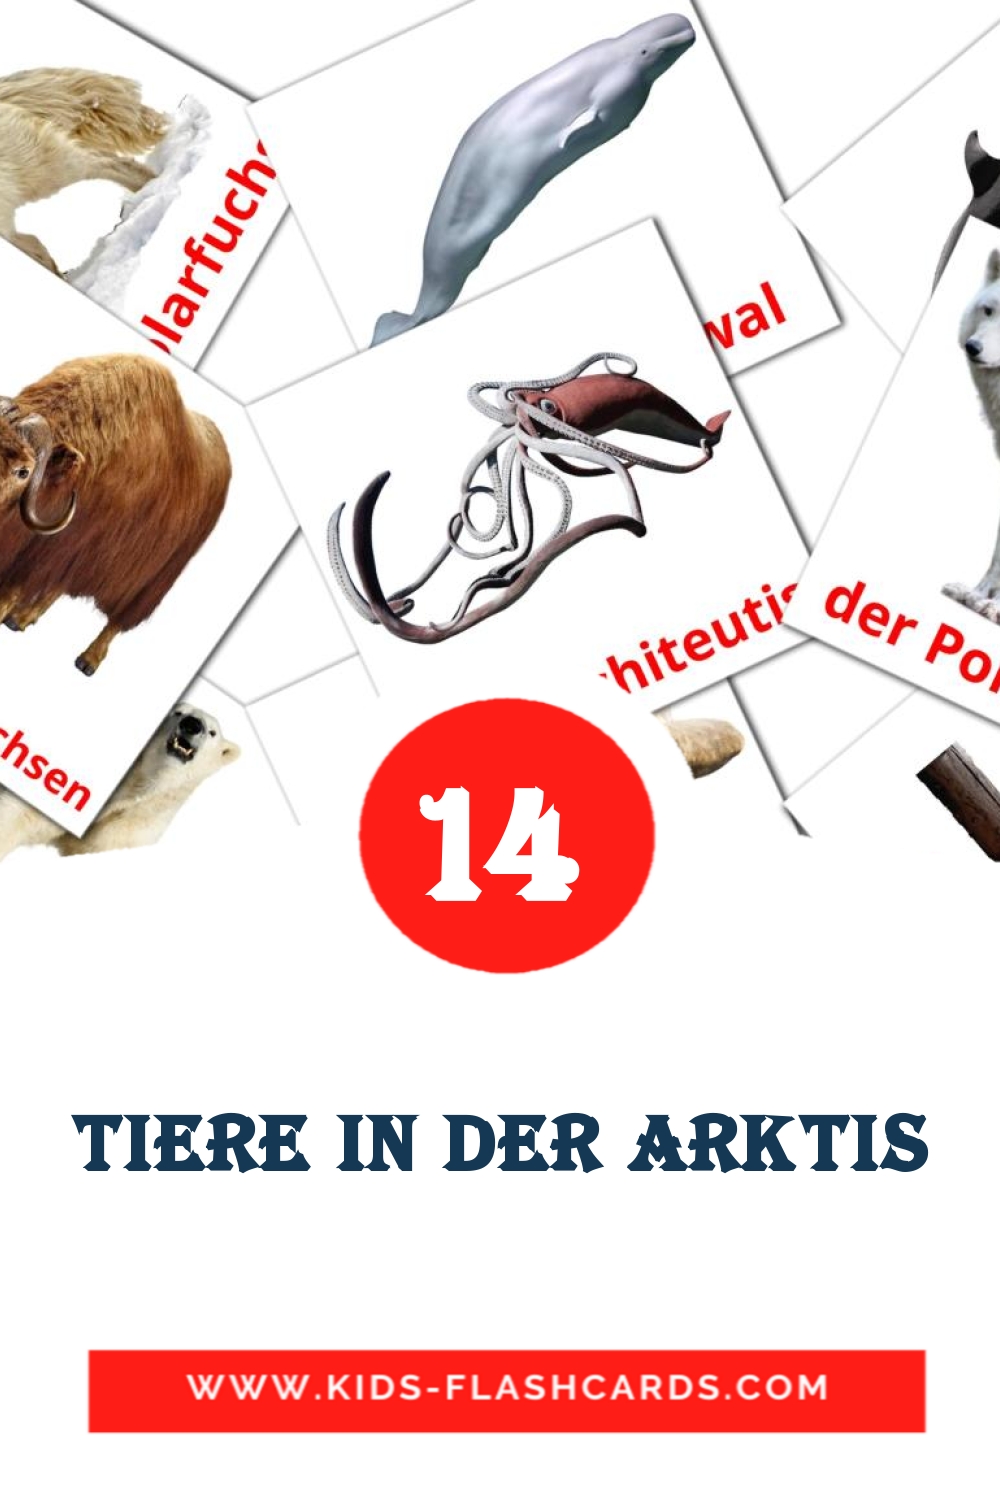 14 Tiere in der arktis Picture Cards for Kindergarden in german